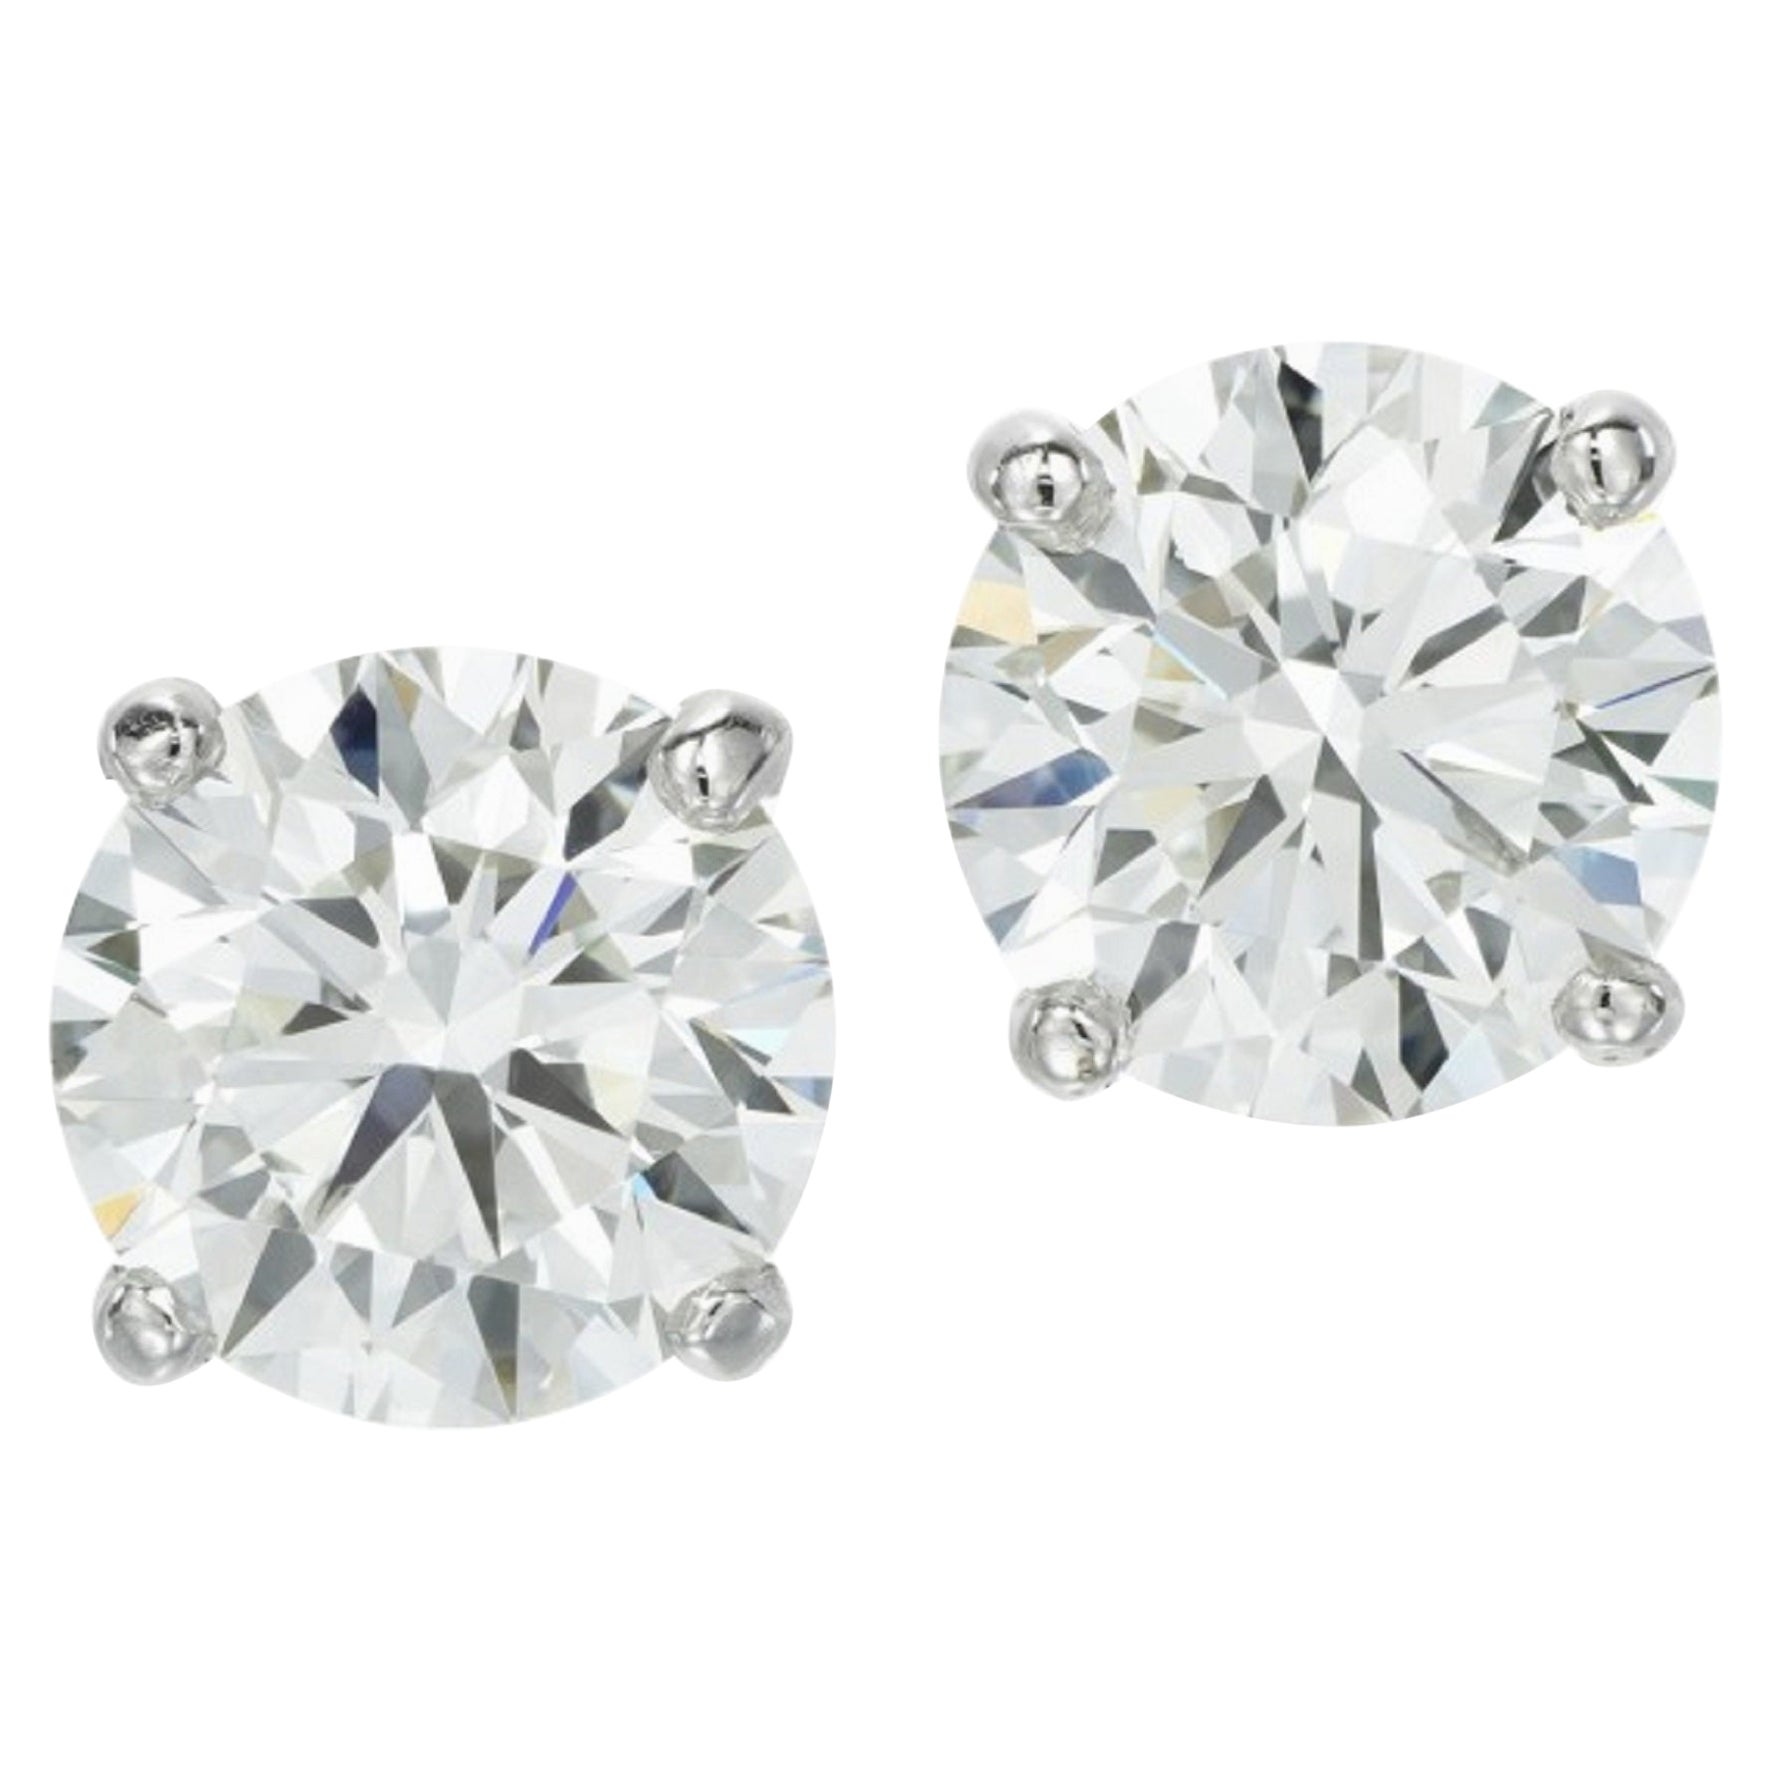 Flawless GIA Certified 10 Carat Round Brilliant Cut Diamond Studs